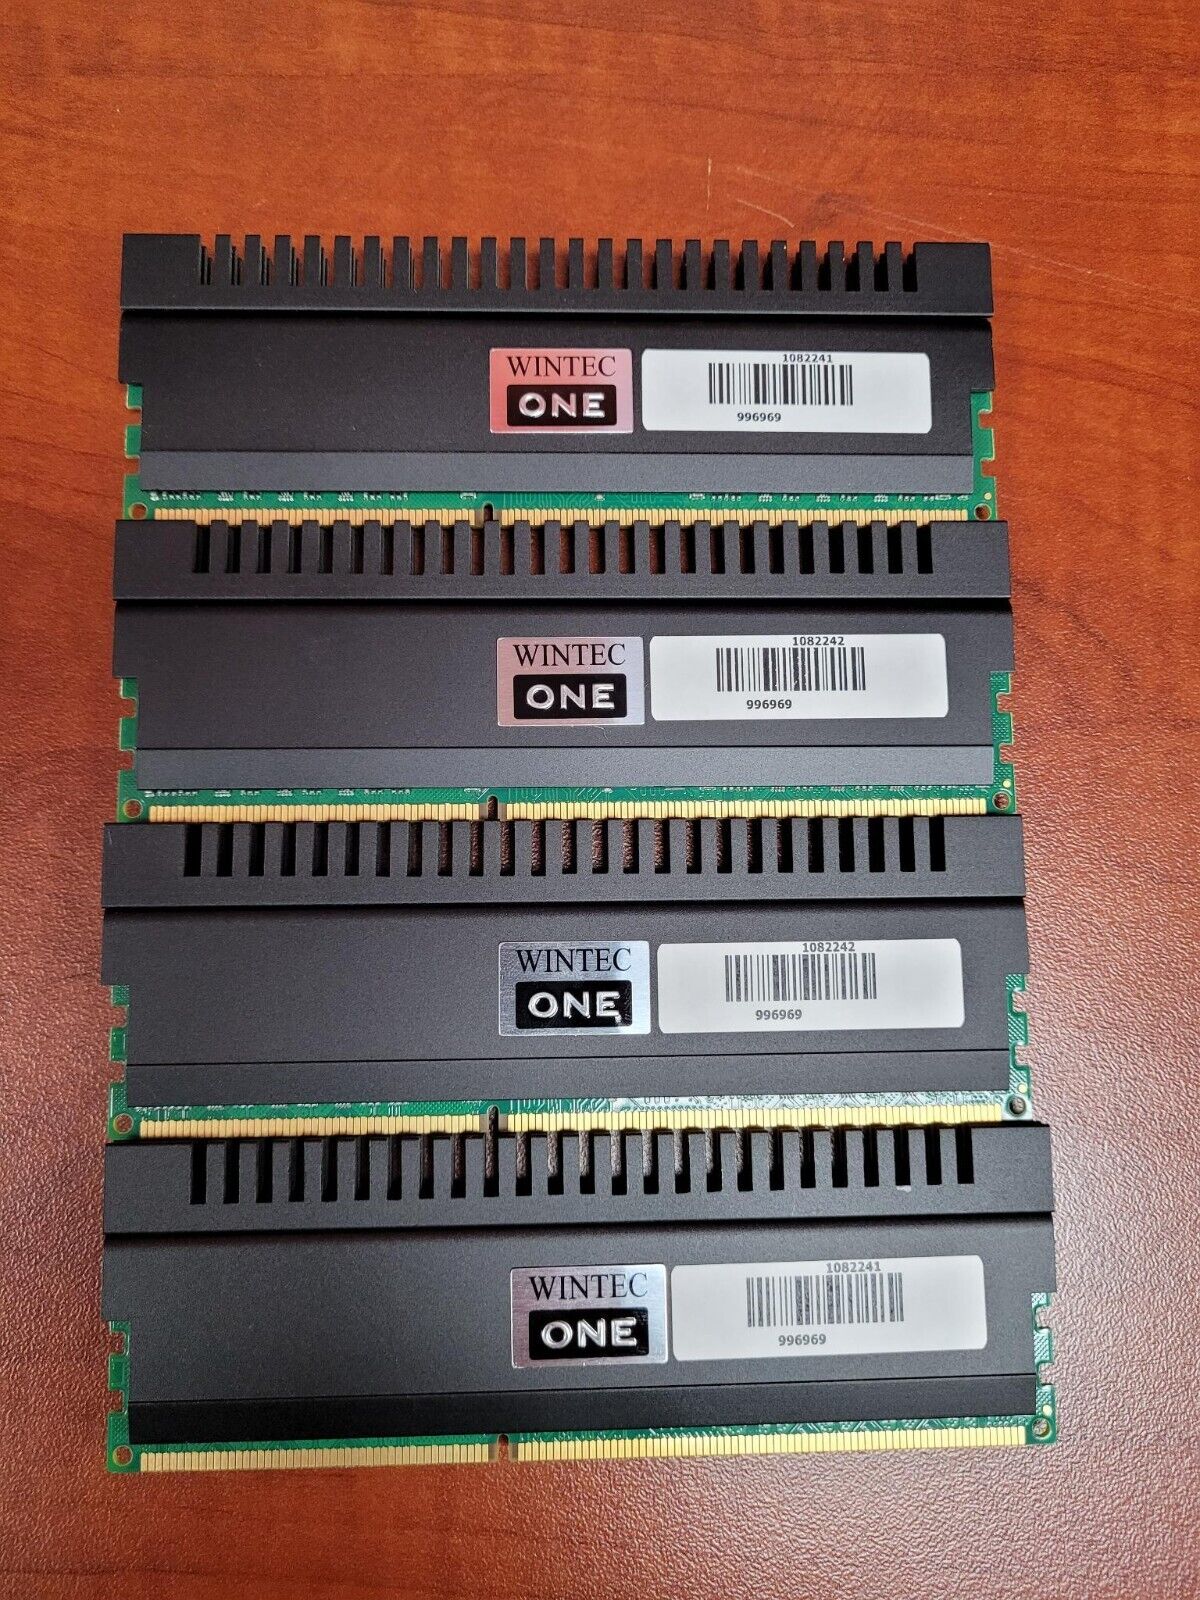 Wintec One 16GB (4x 4GB) DDR3 1600Mhz Desktop RAM 3OH16009U9H-8GK